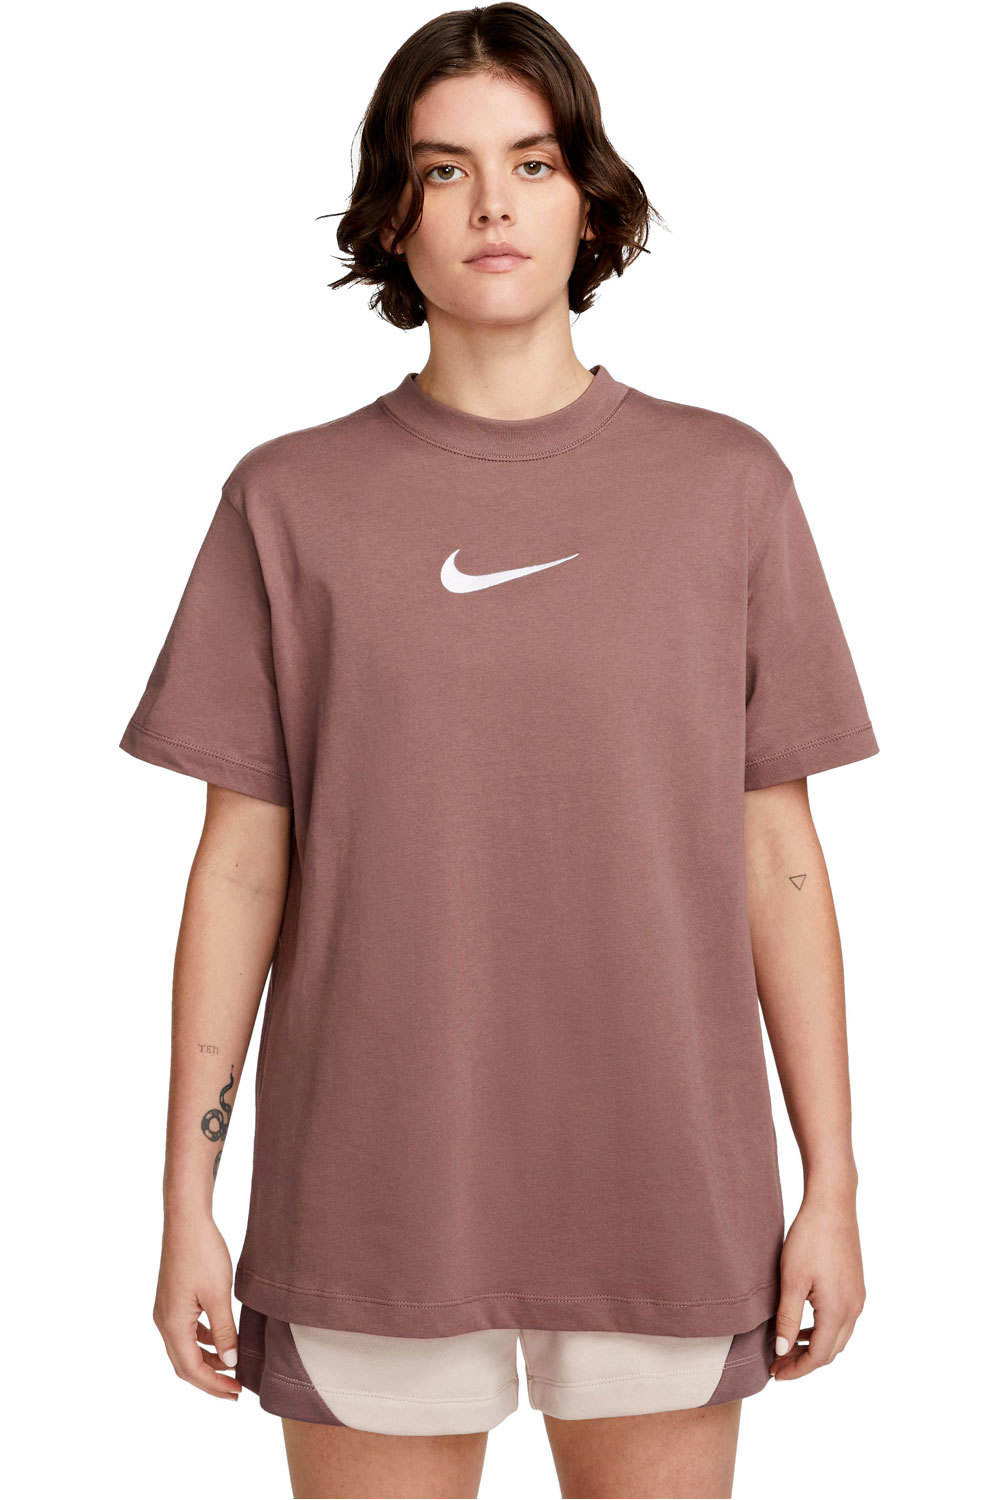 Nike camiseta manga corta mujer W NSW TEE BF MS vista frontal